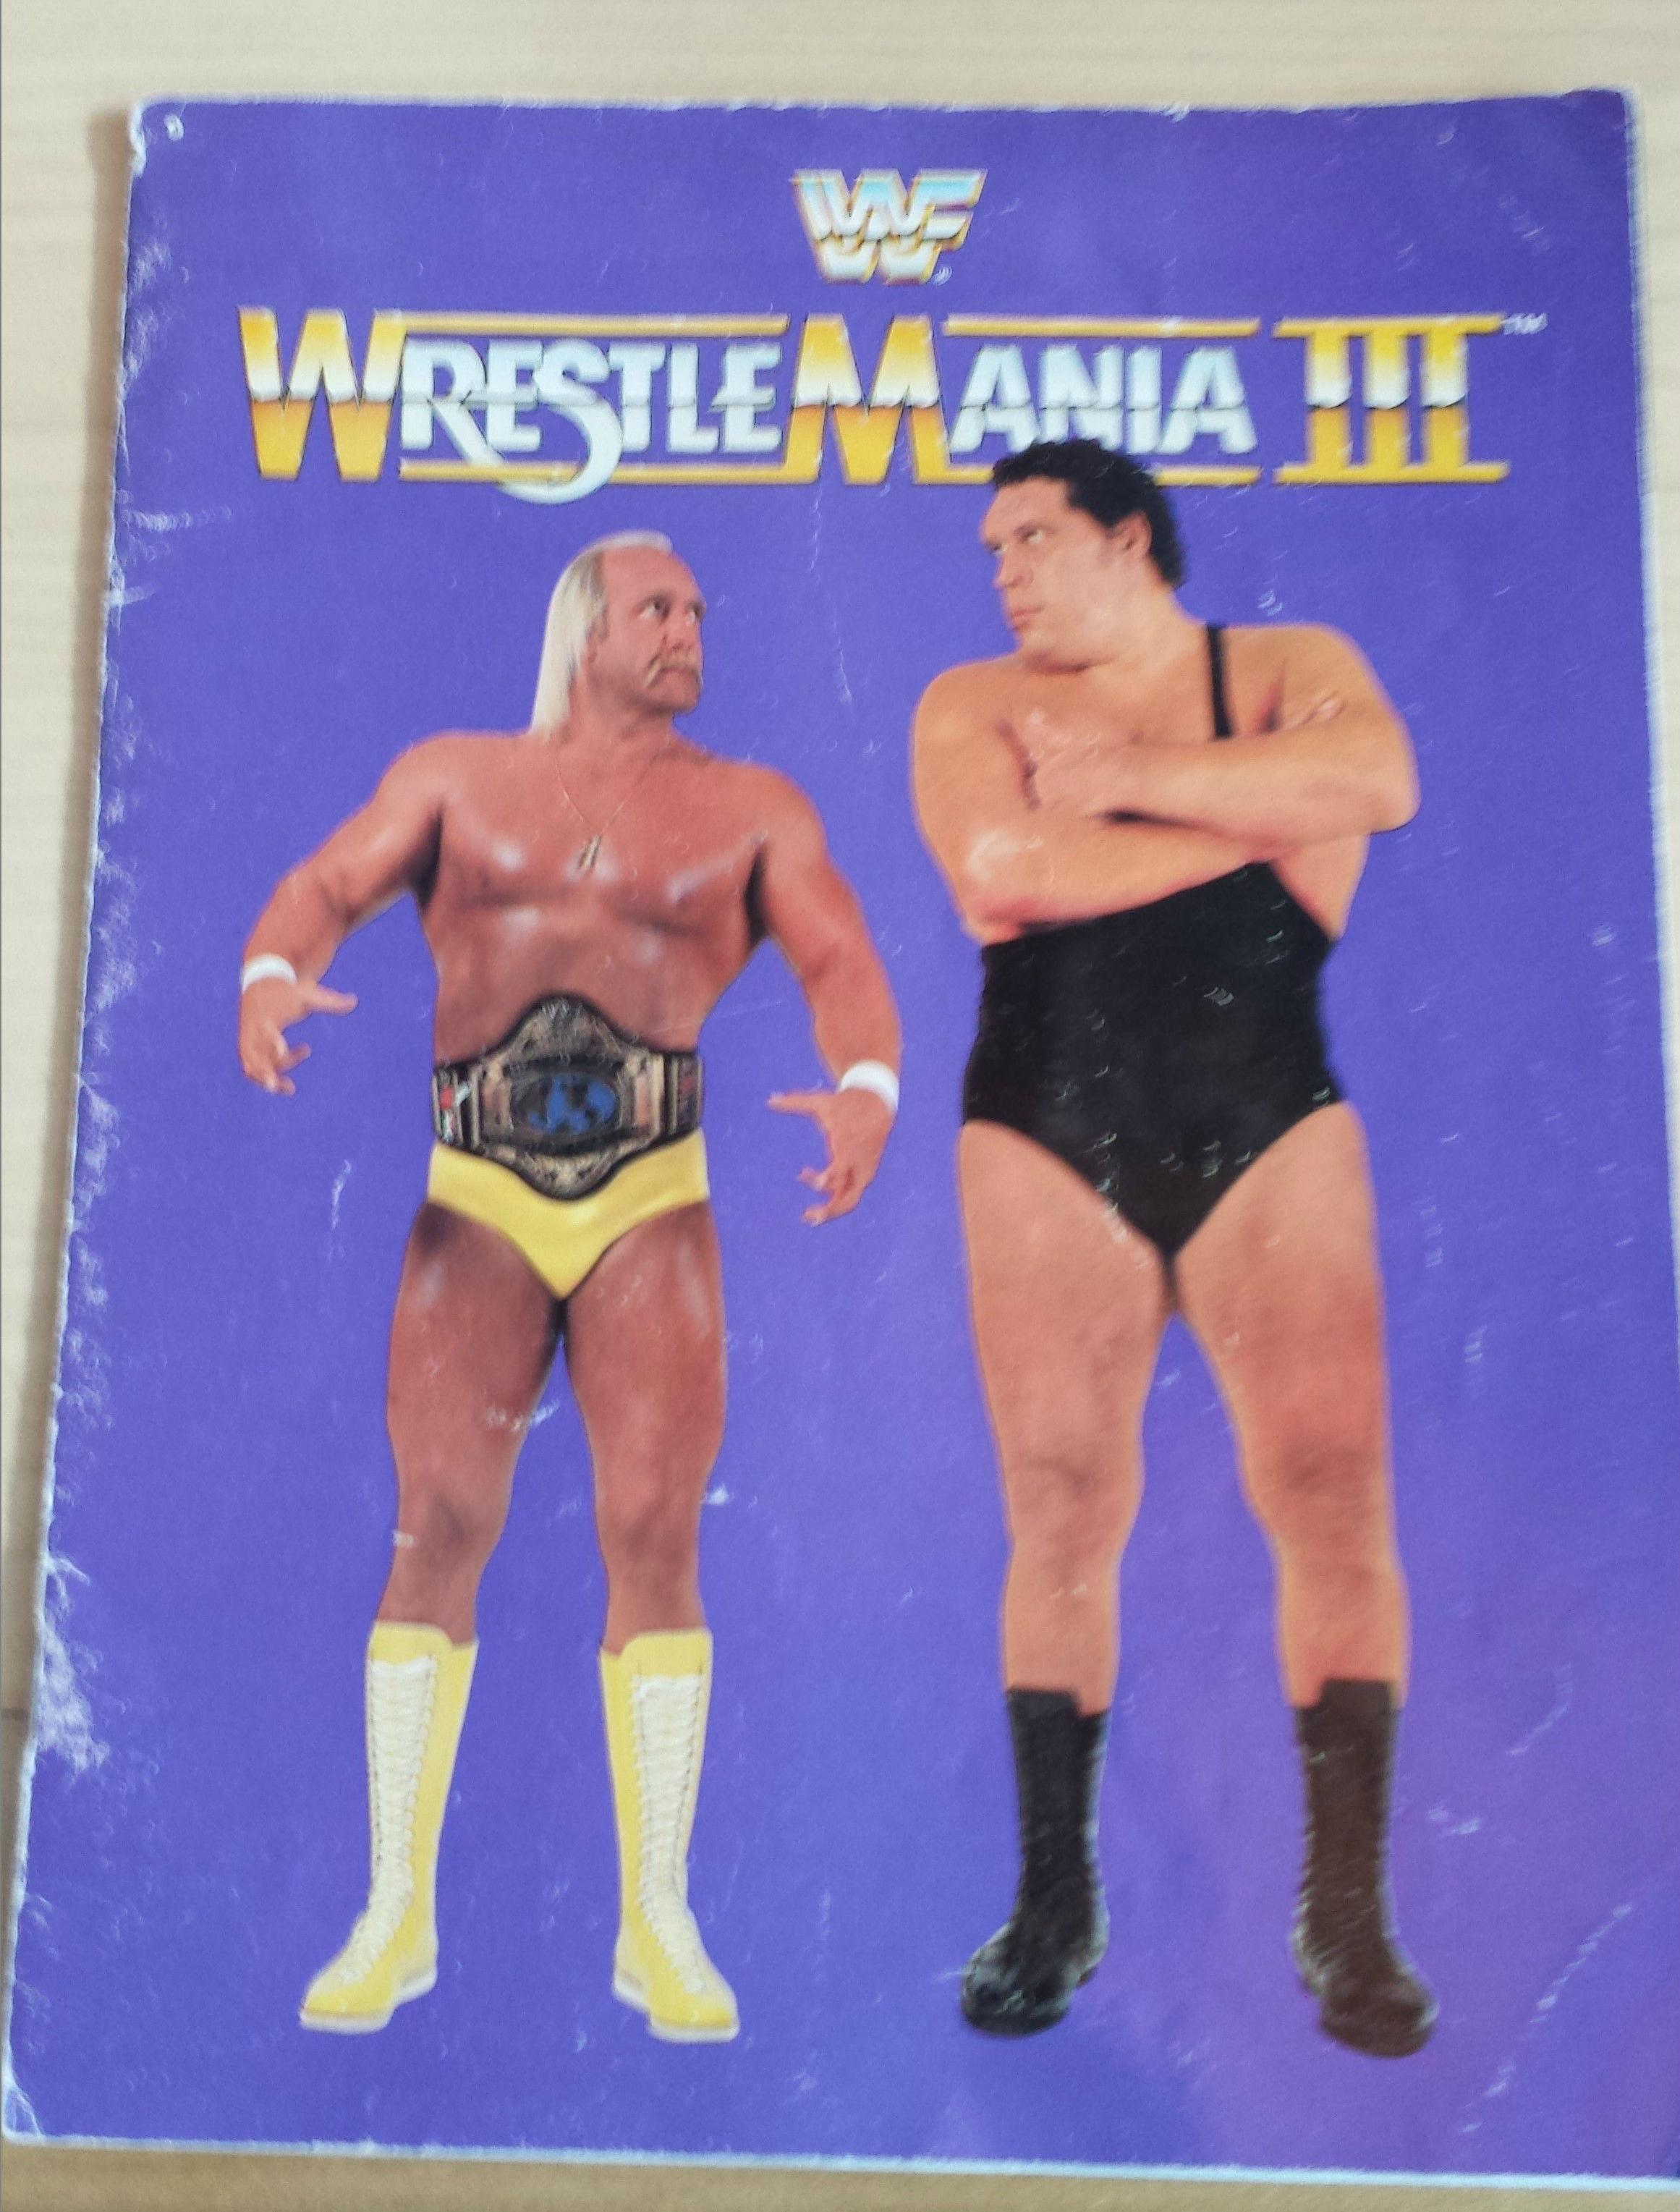 HQ WrestleMania III Wallpapers | File 502.24Kb